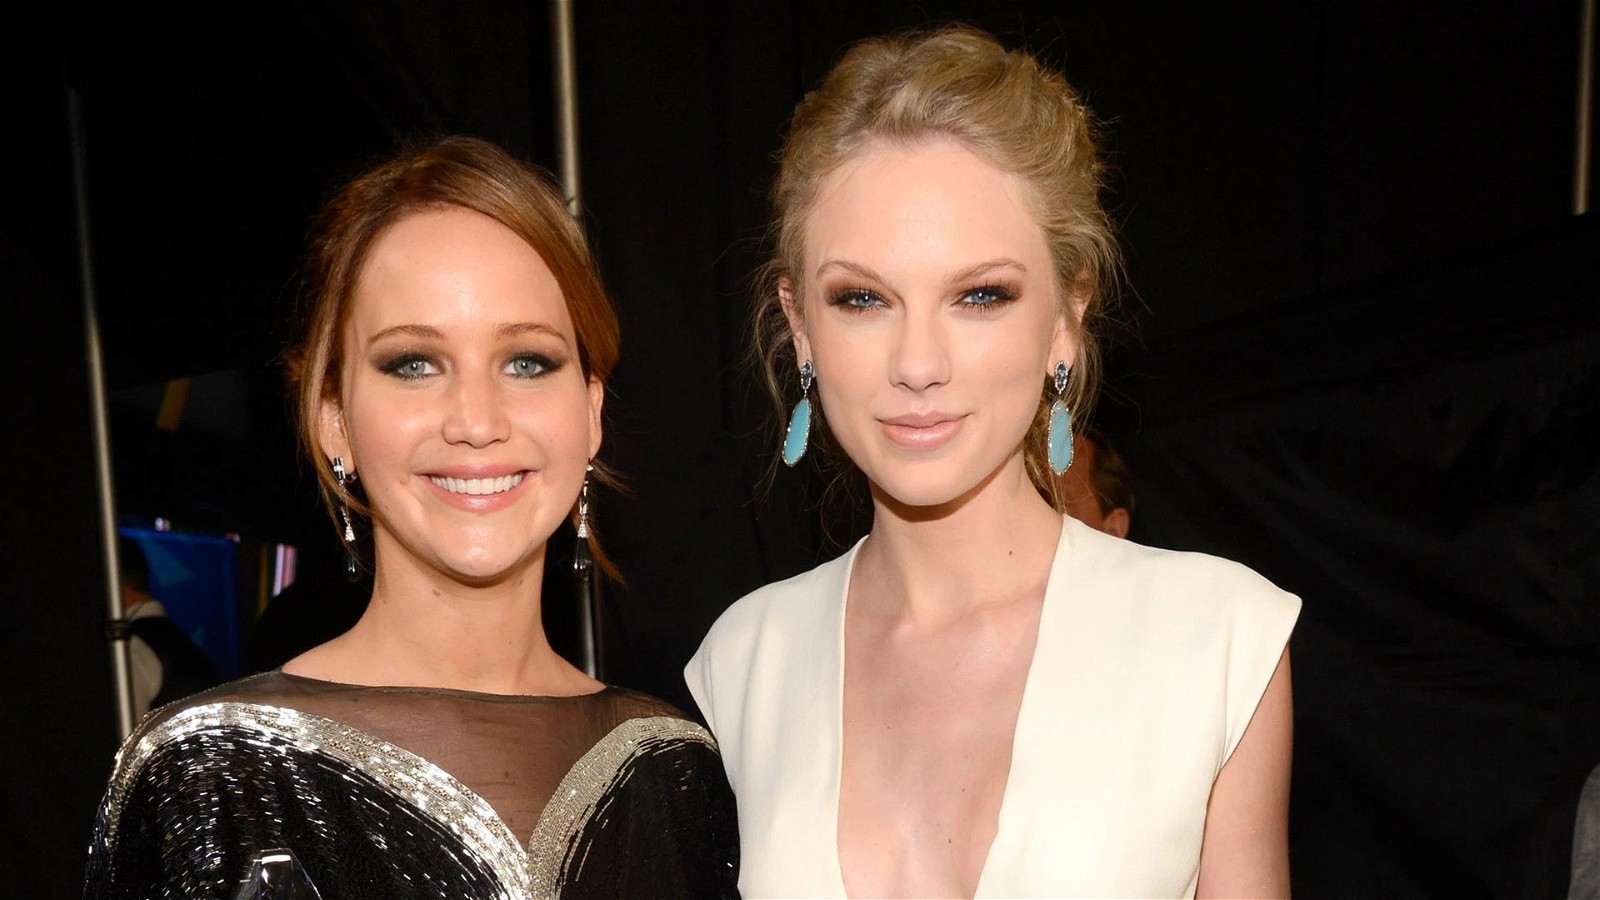 Jennifer Lawrence and Taylor Swift